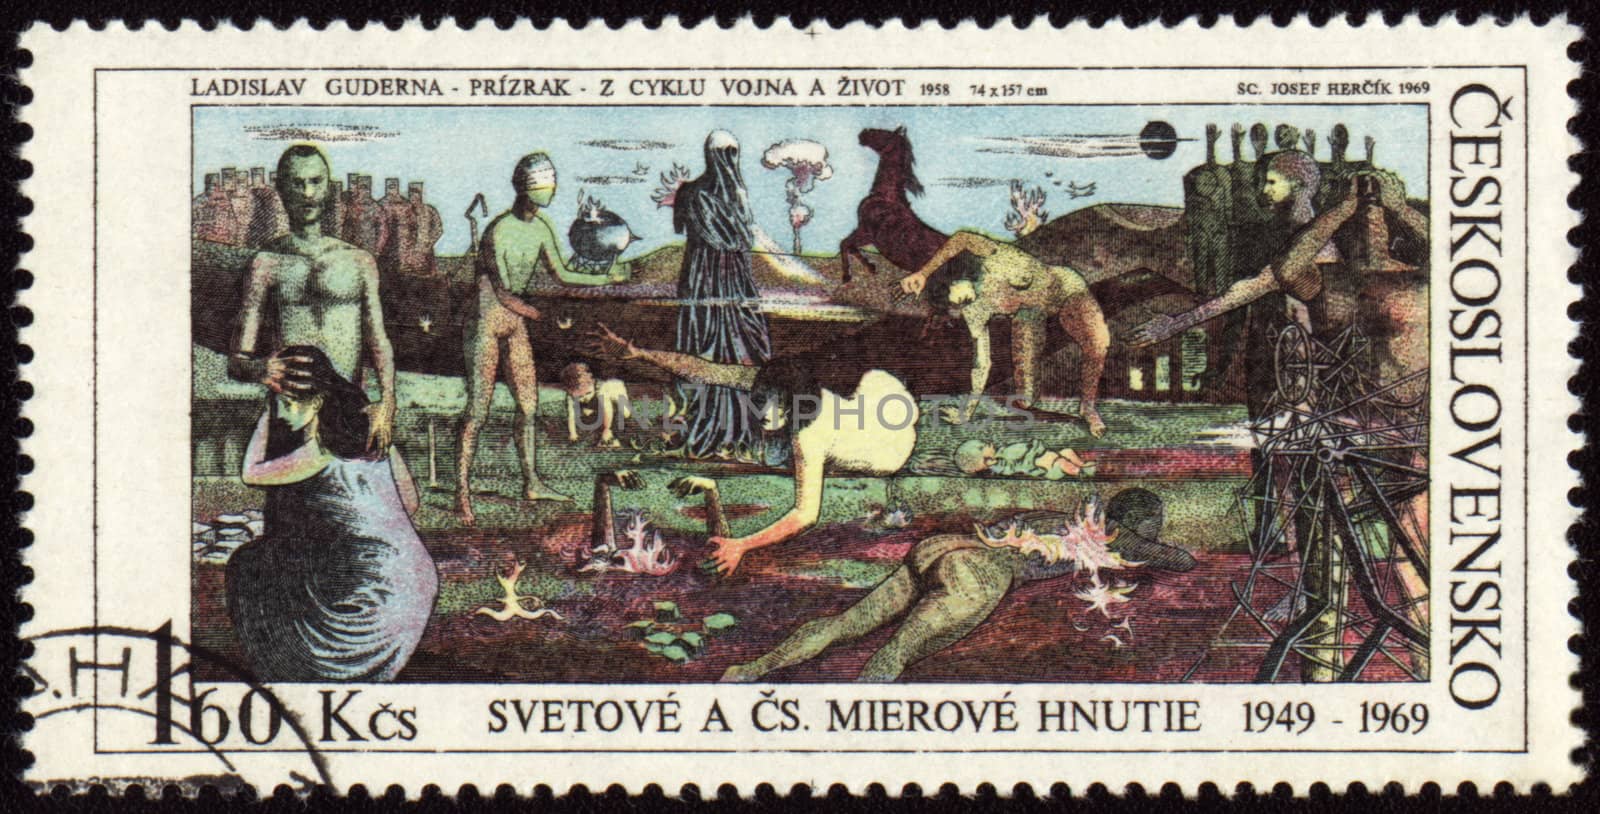 CZECHOSLOVAKIA - CIRCA 1969: A stamp printed in Czechoslovakia shows a painting "Juggernaut" by Ladislav Guderna, circa 1969